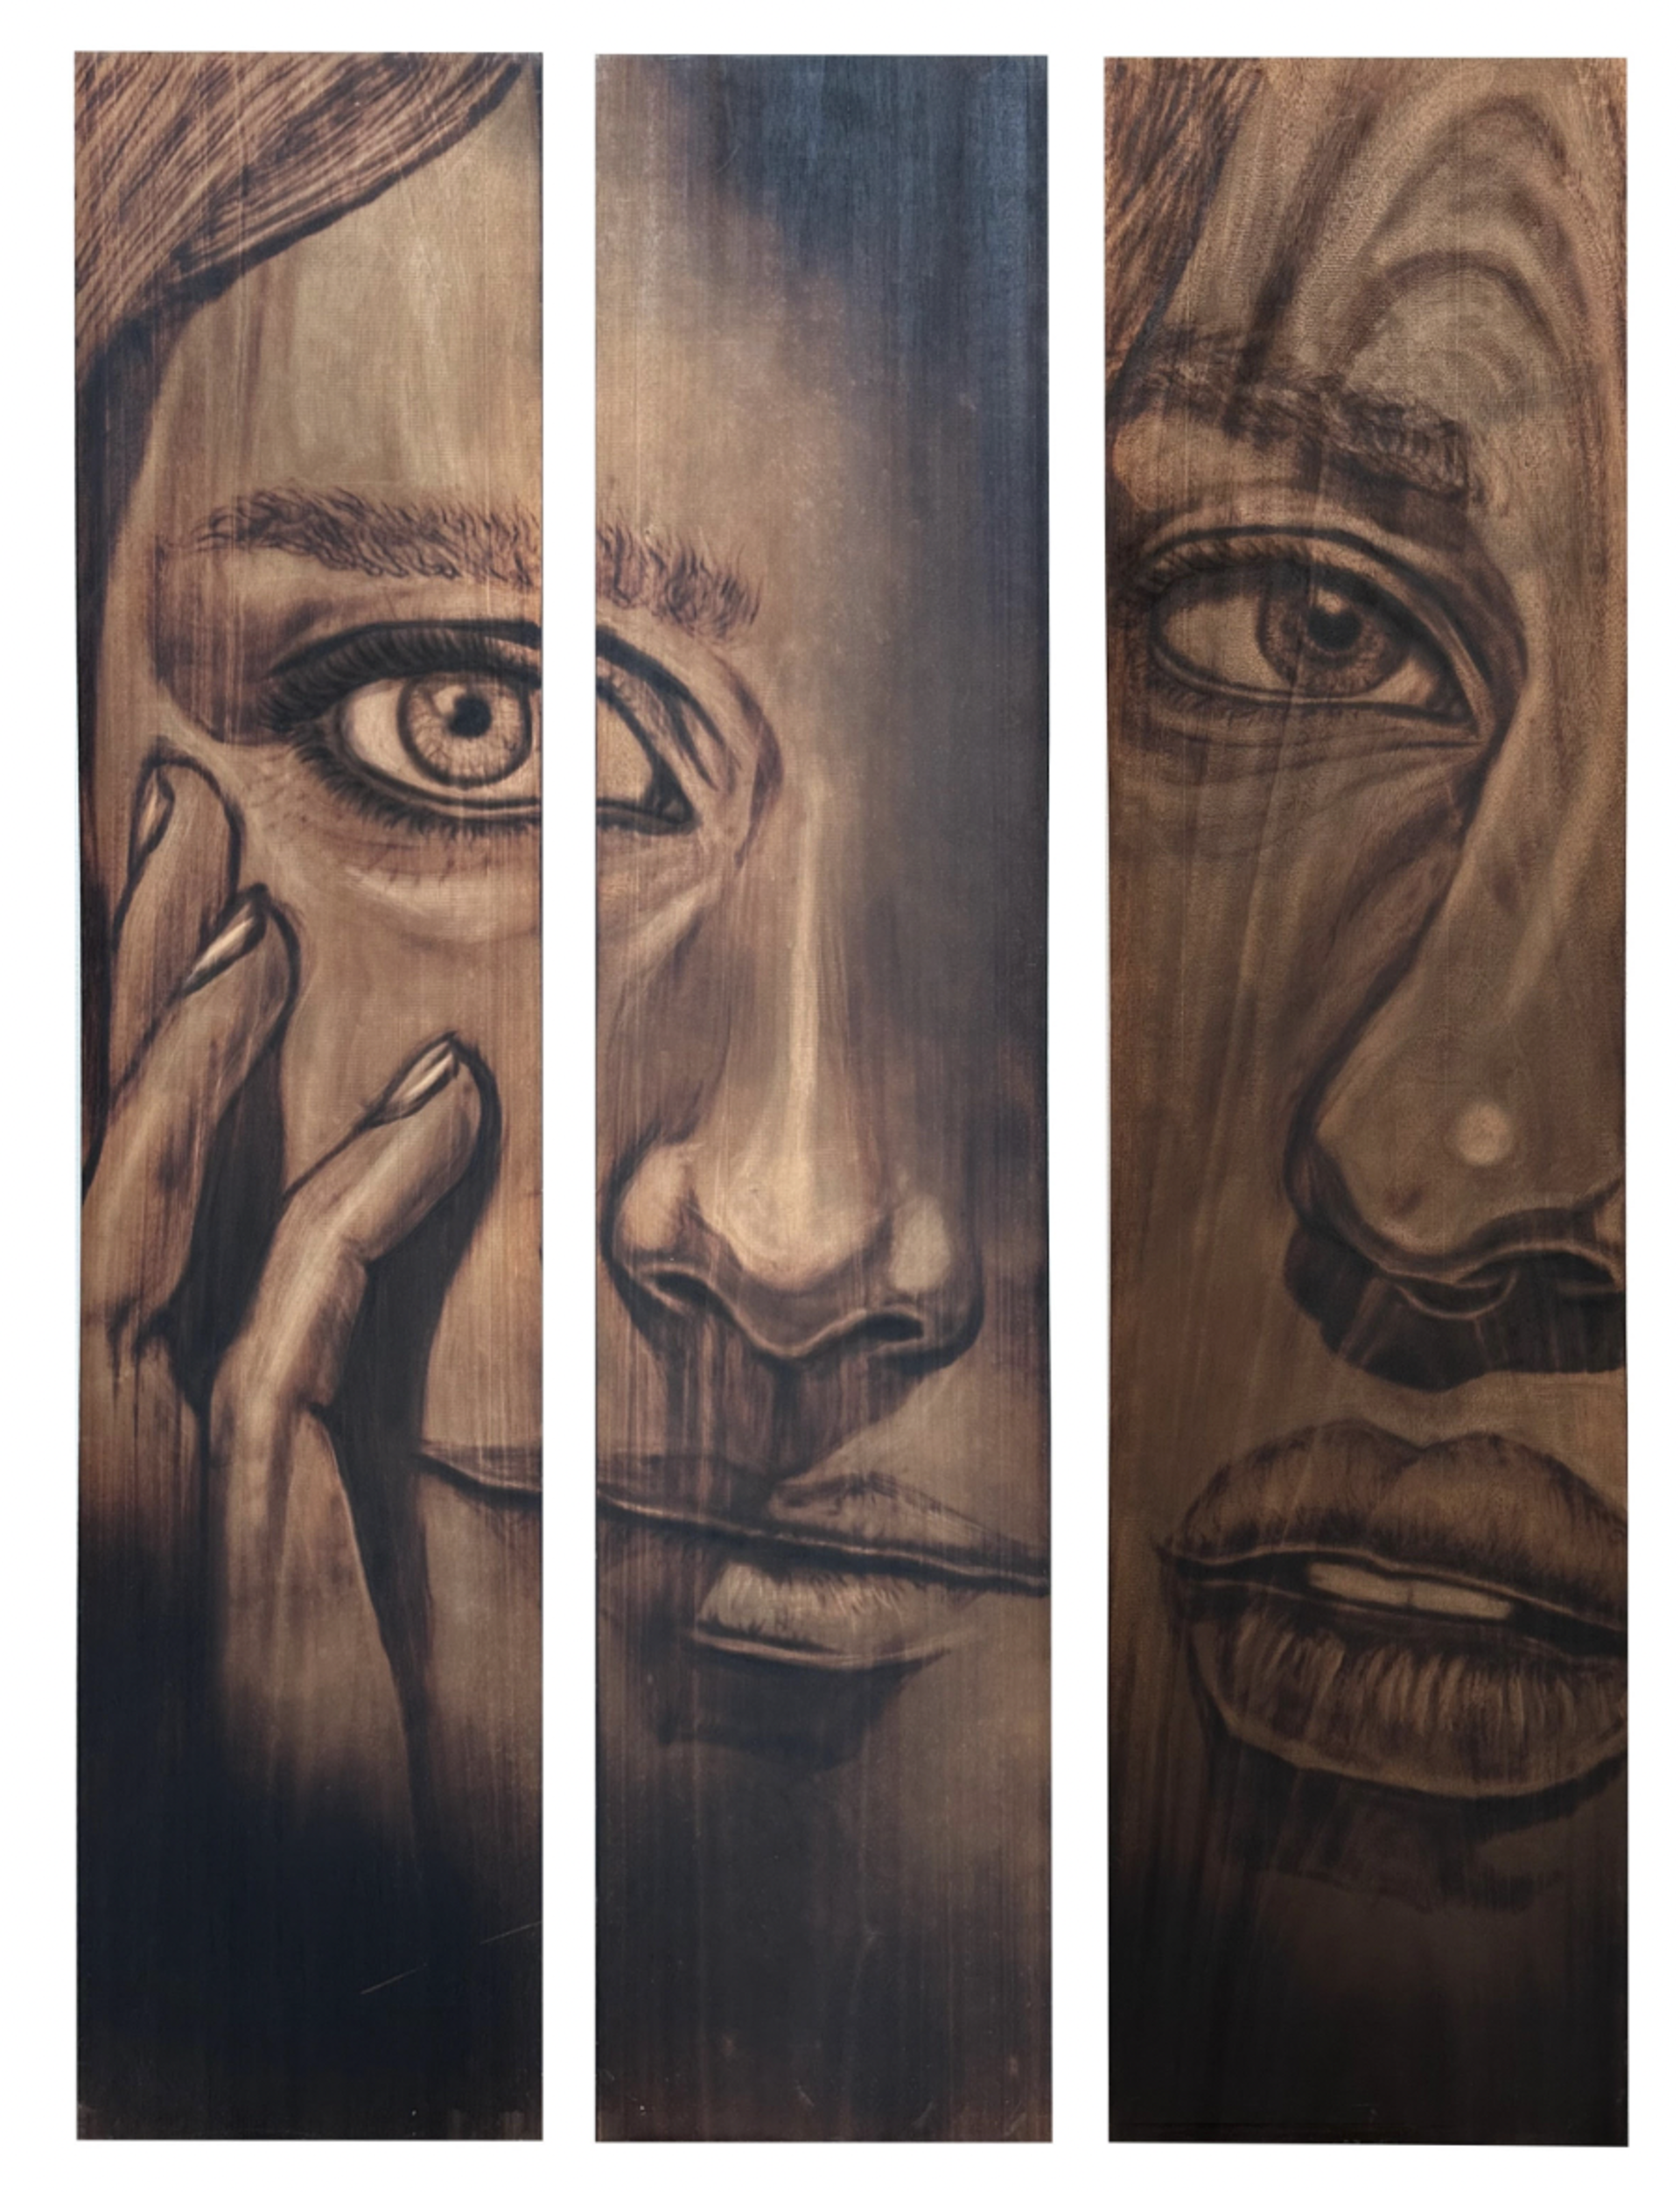 3 Panels by Zachary Aronson